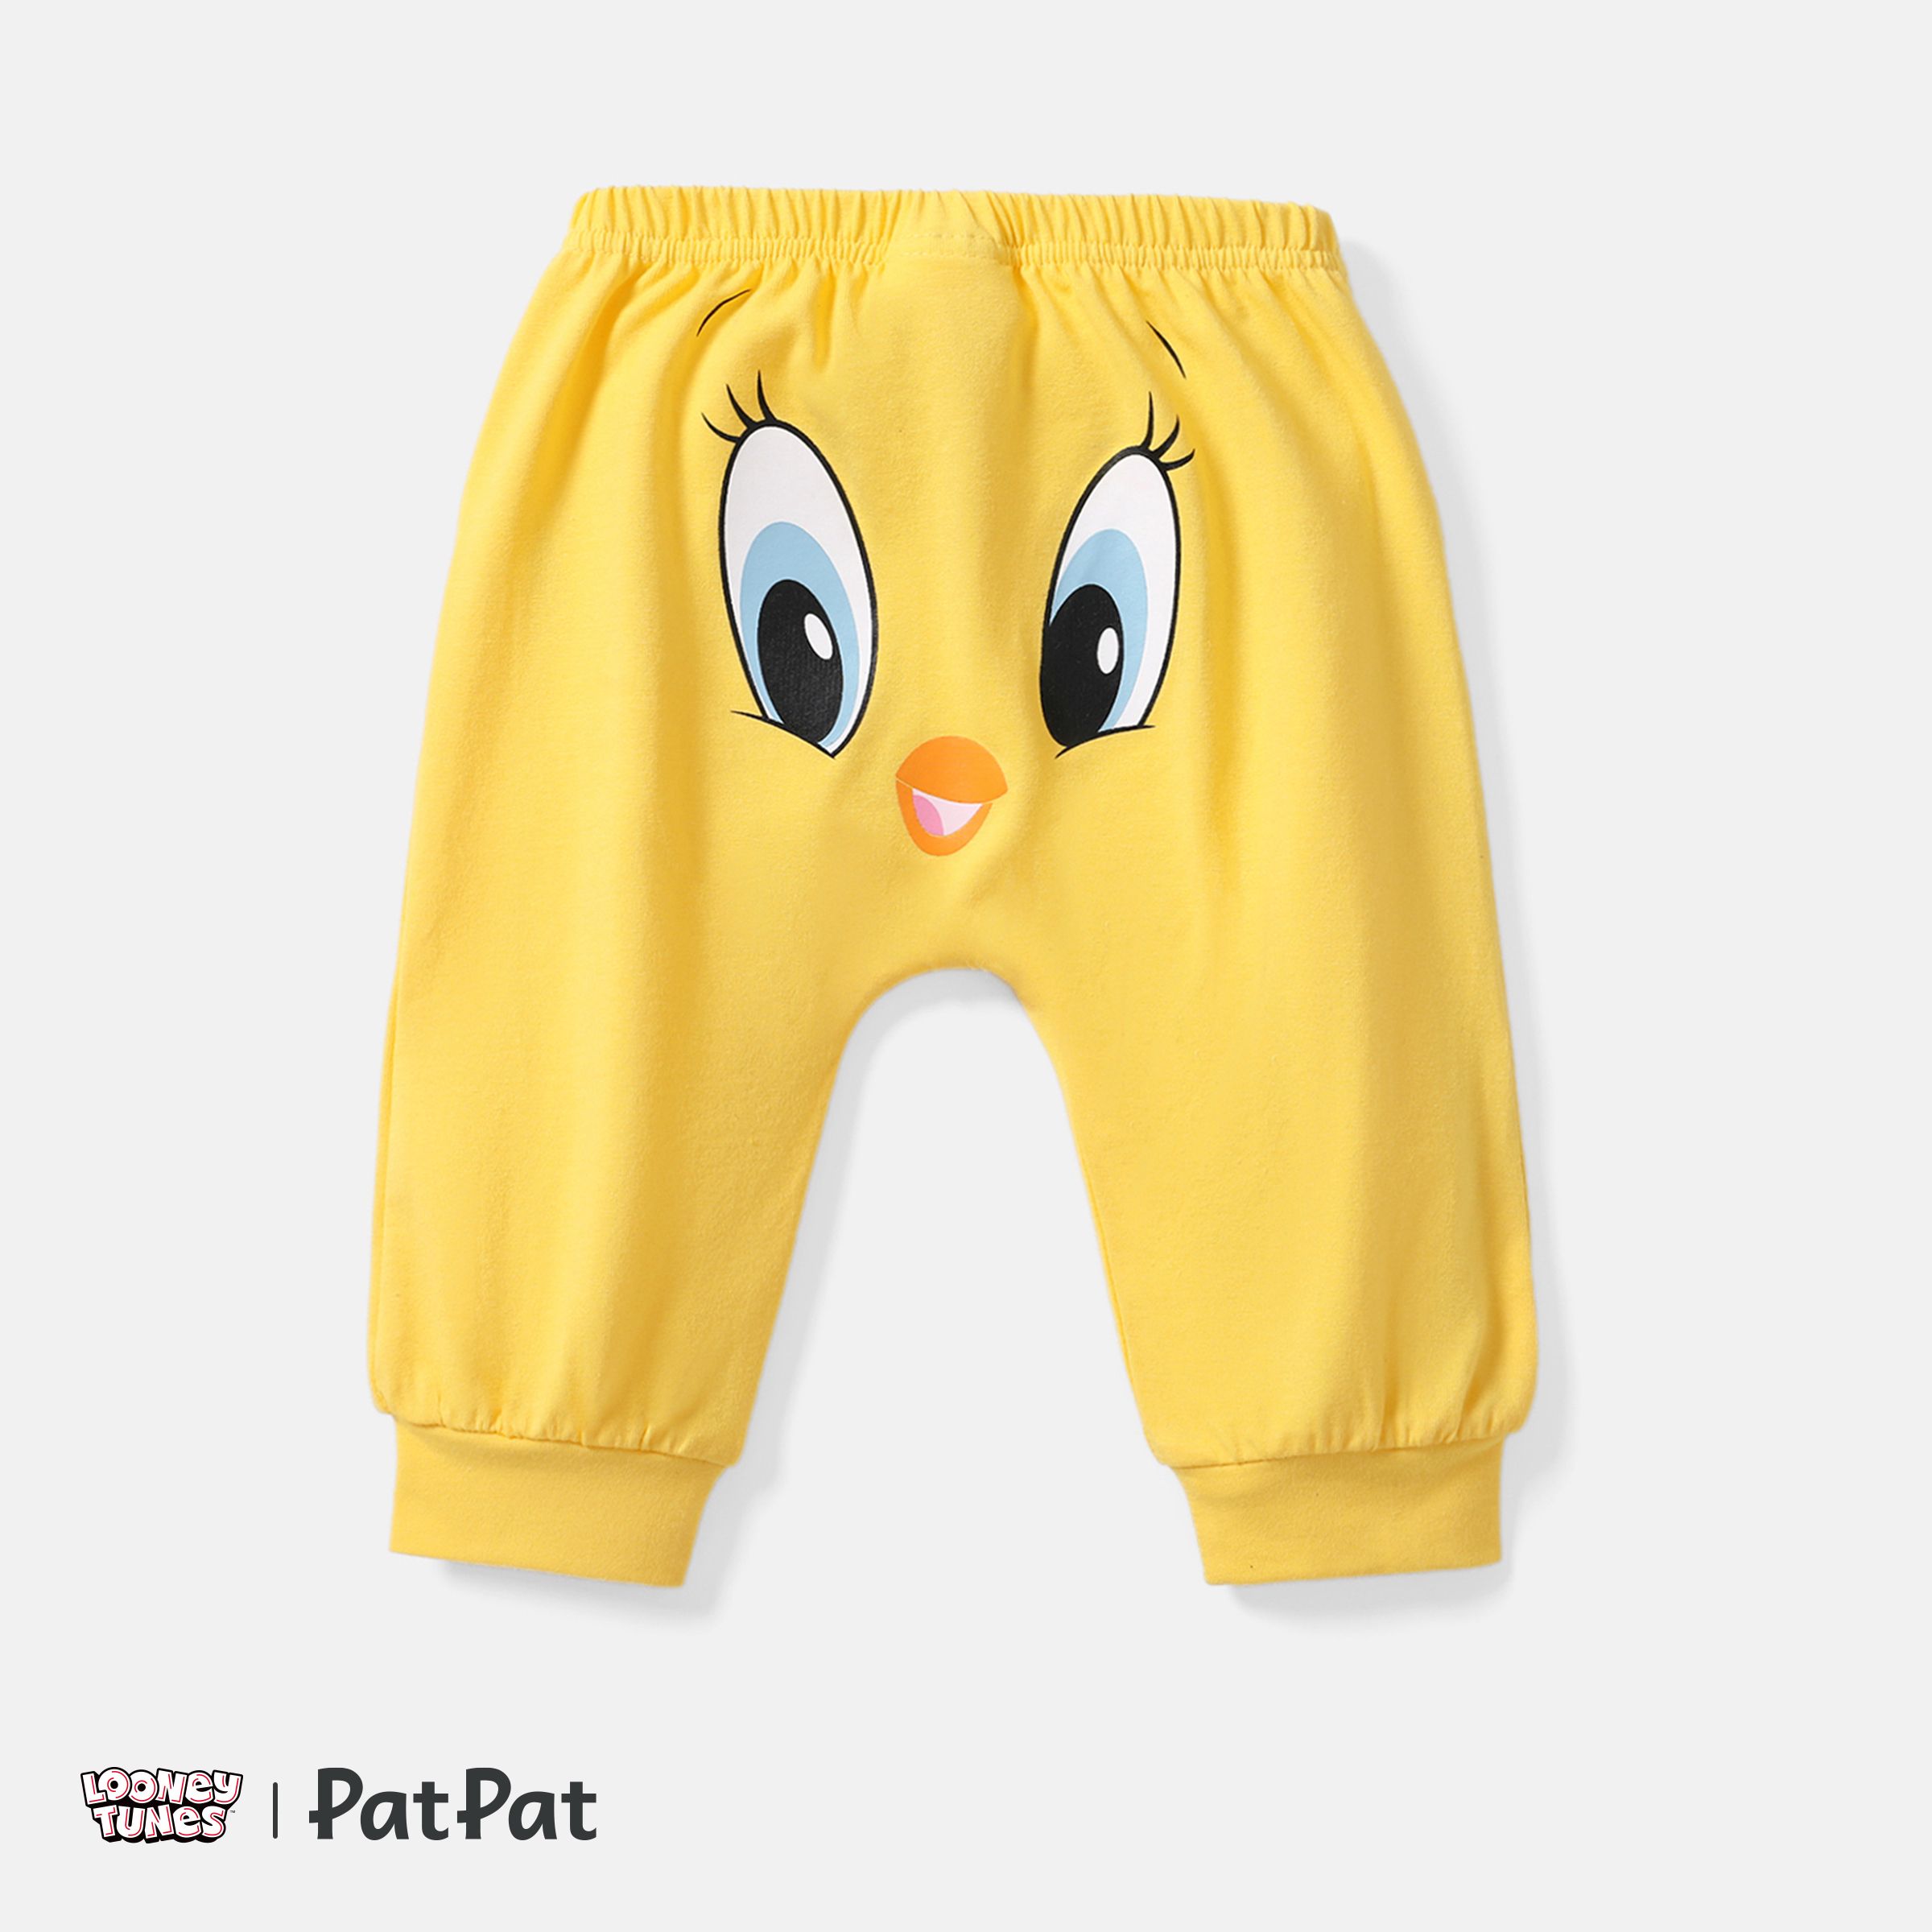 Looney Tunes Baby Boy/Girl Cartoon Animal Print Cotton Sweatpants